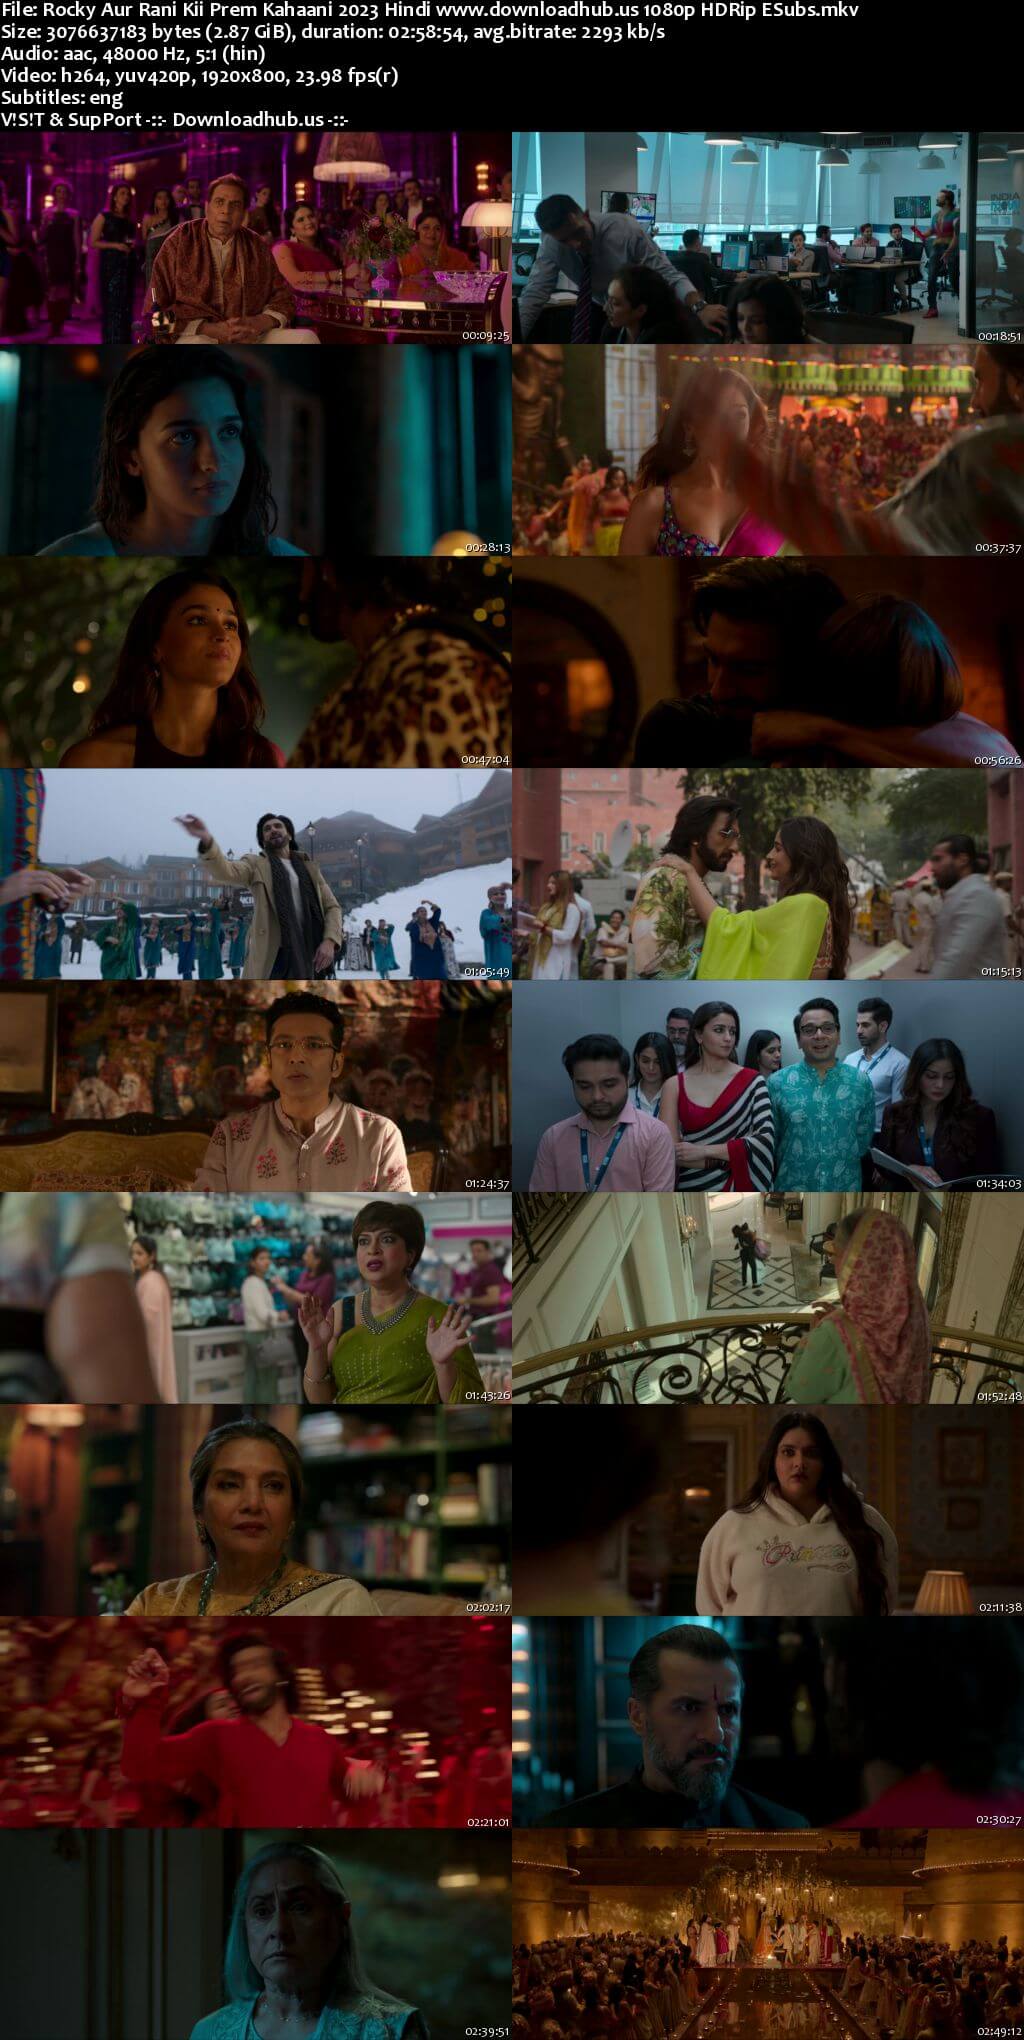 Rocky Aur Rani Kii Prem Kahaani 2023 Hindi Movie DD5.1 1080p 720p 480p HDRip ESubs x264 HEVC